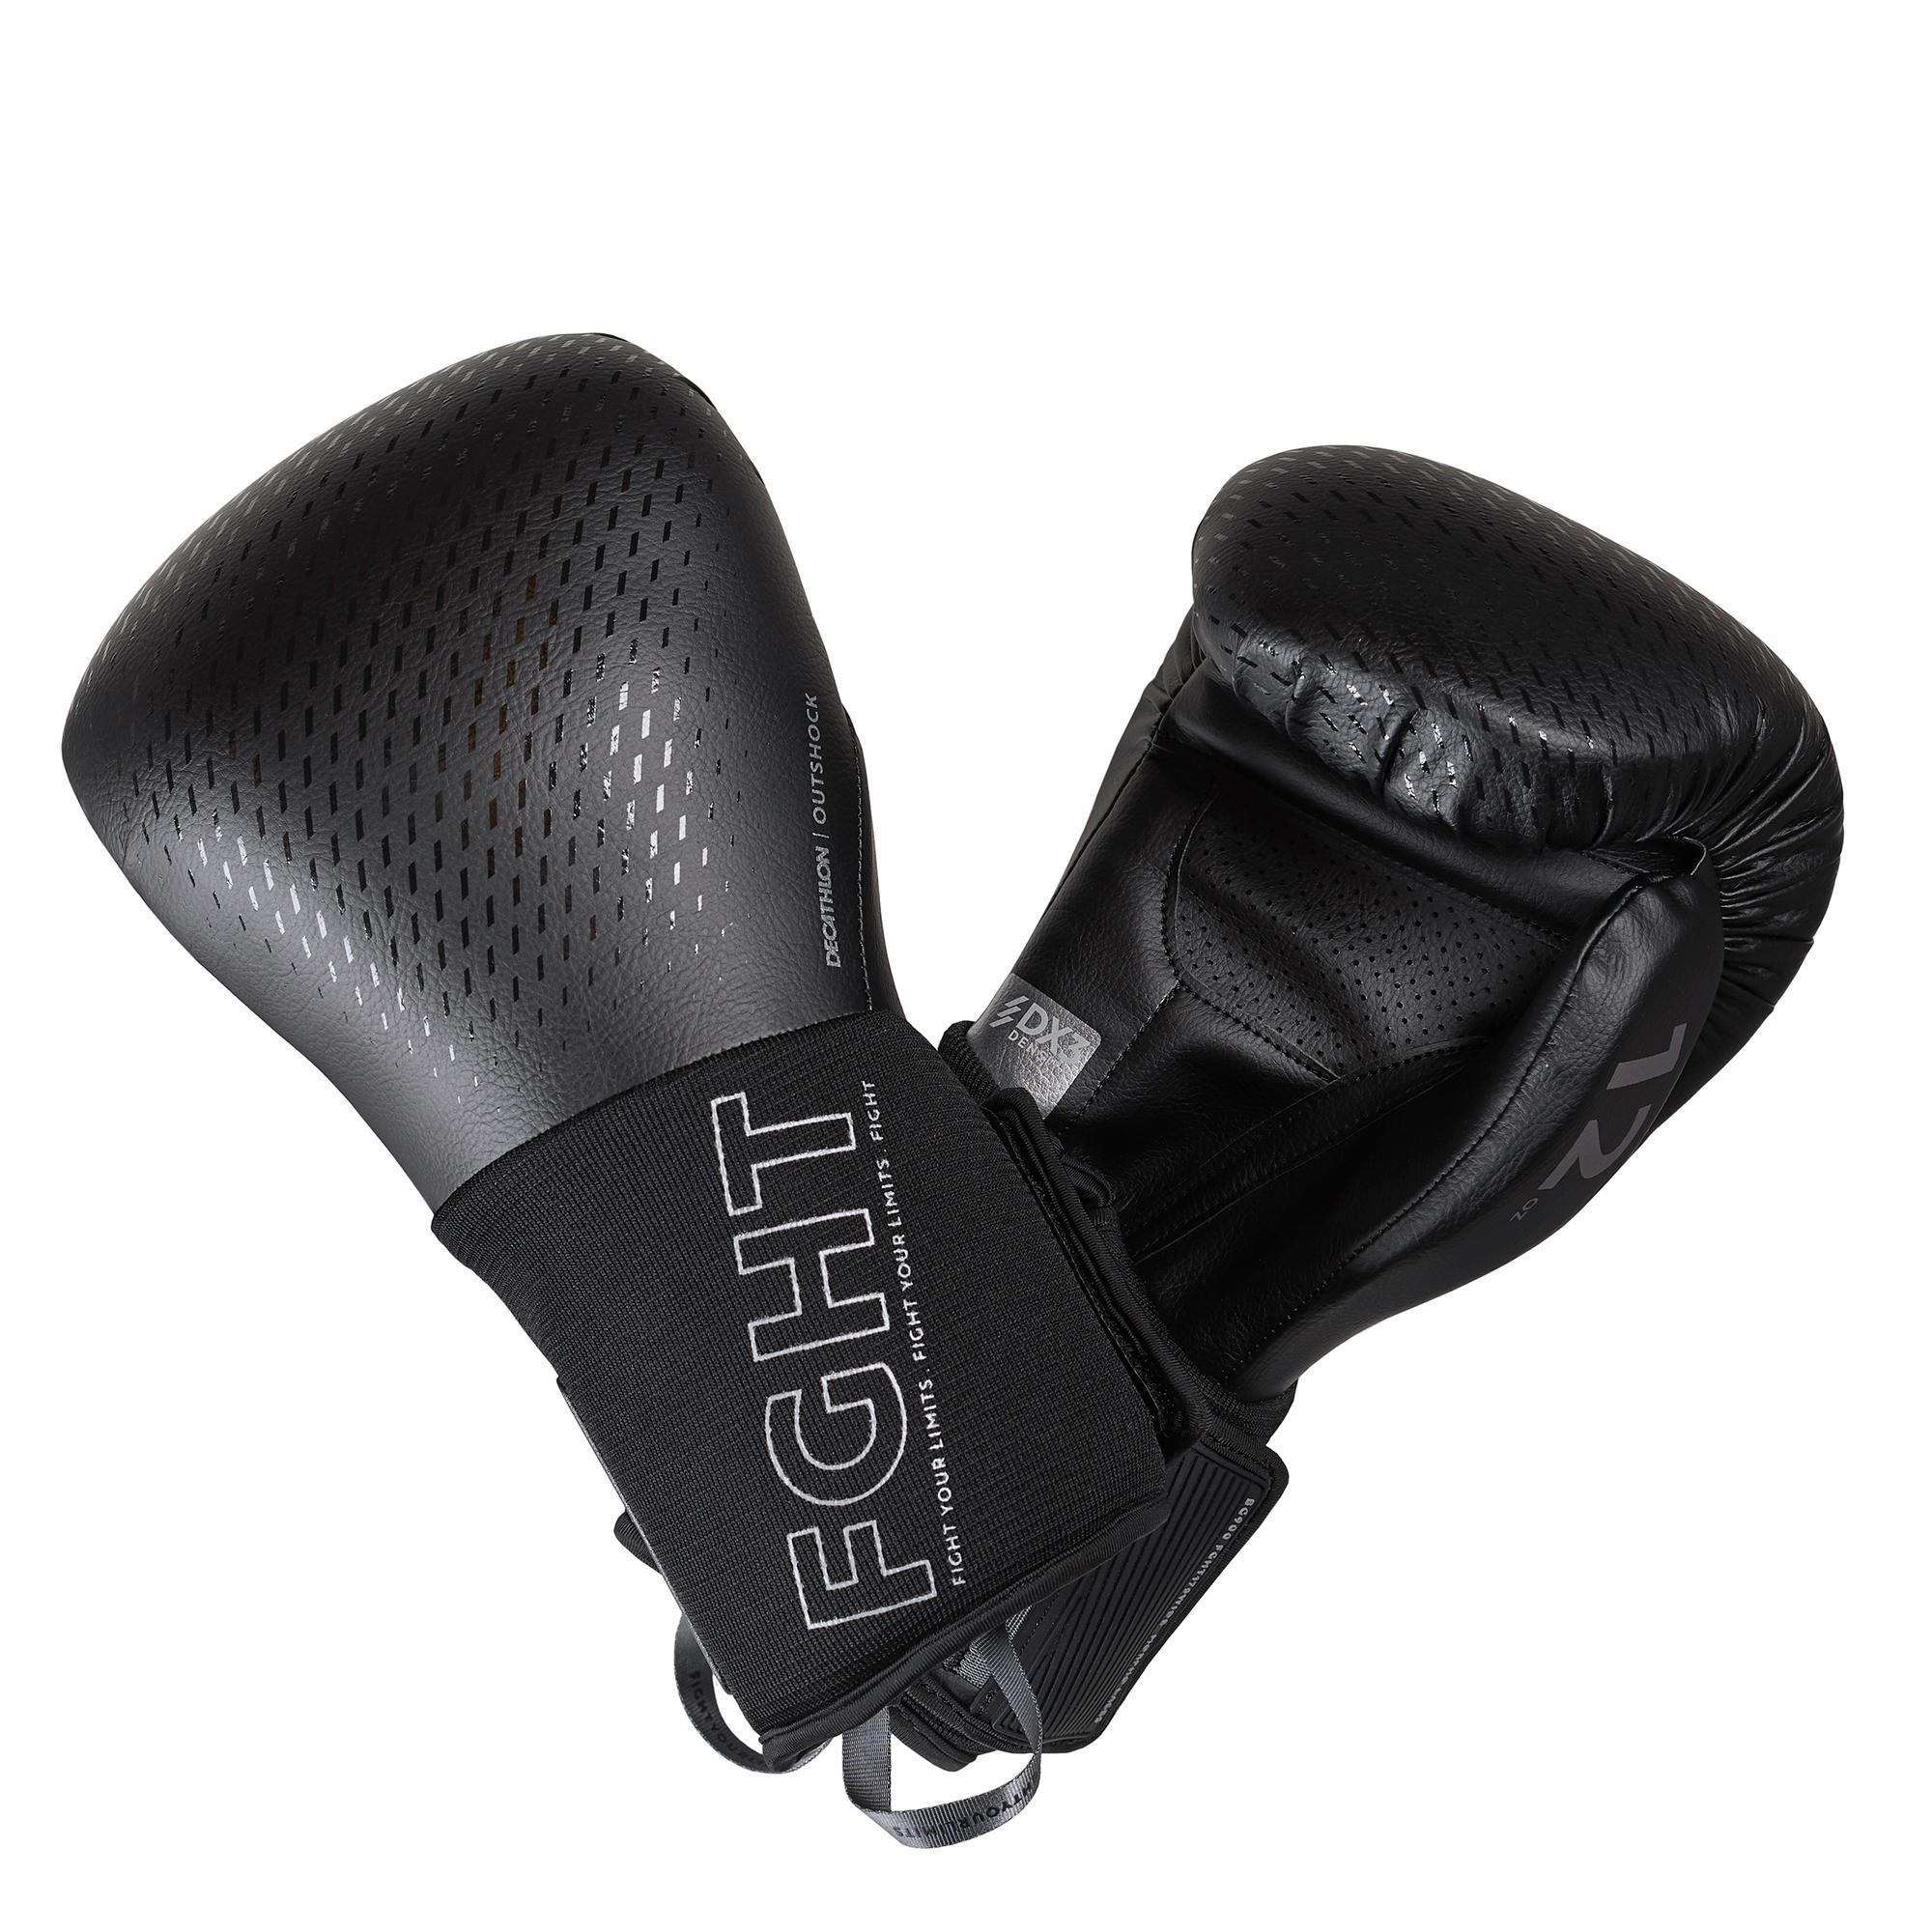 Sparring Boxing Gloves 900 - Black 